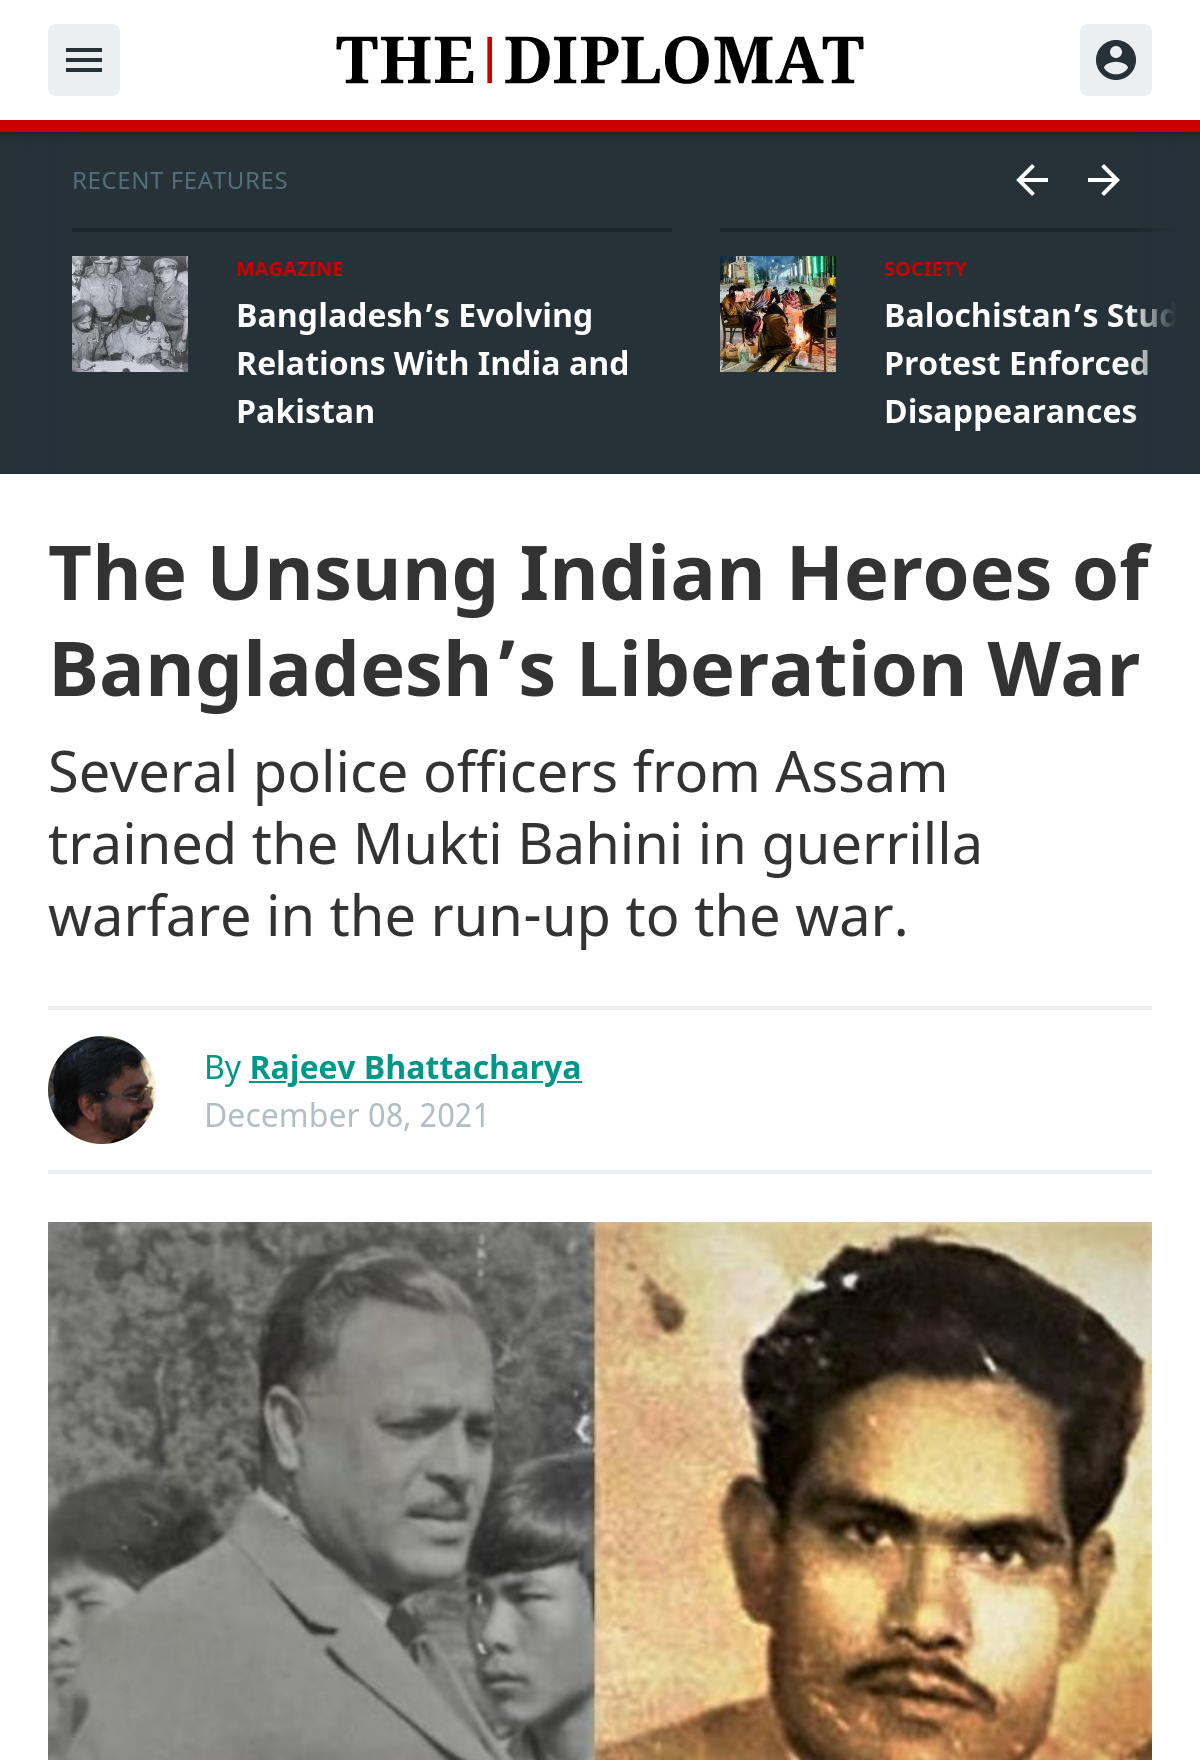 The Diplomat - The Unsung Indian Heroes of Bangladesh Liberation War